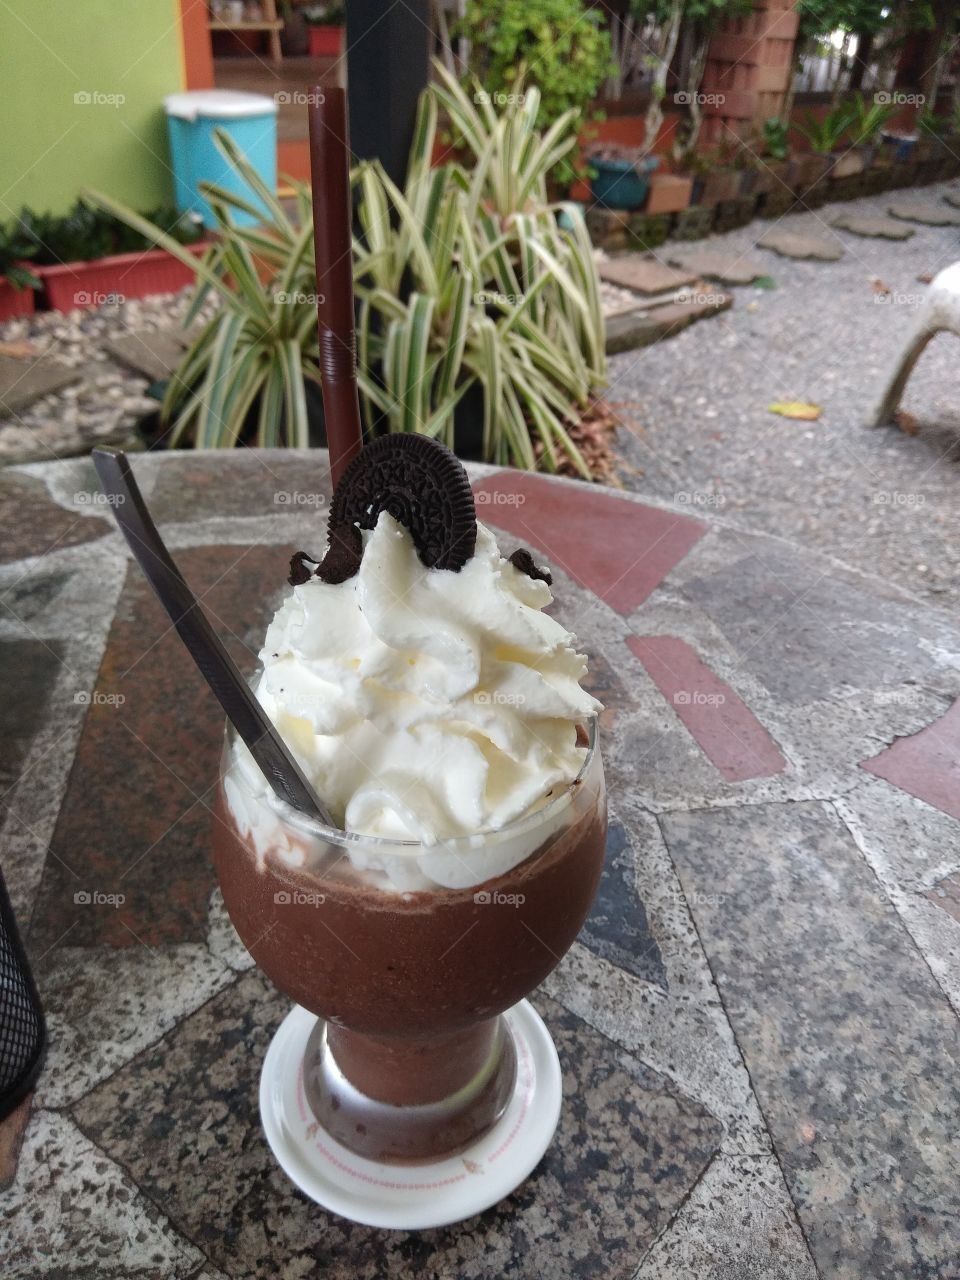 Chocholate milkshake in Thailand